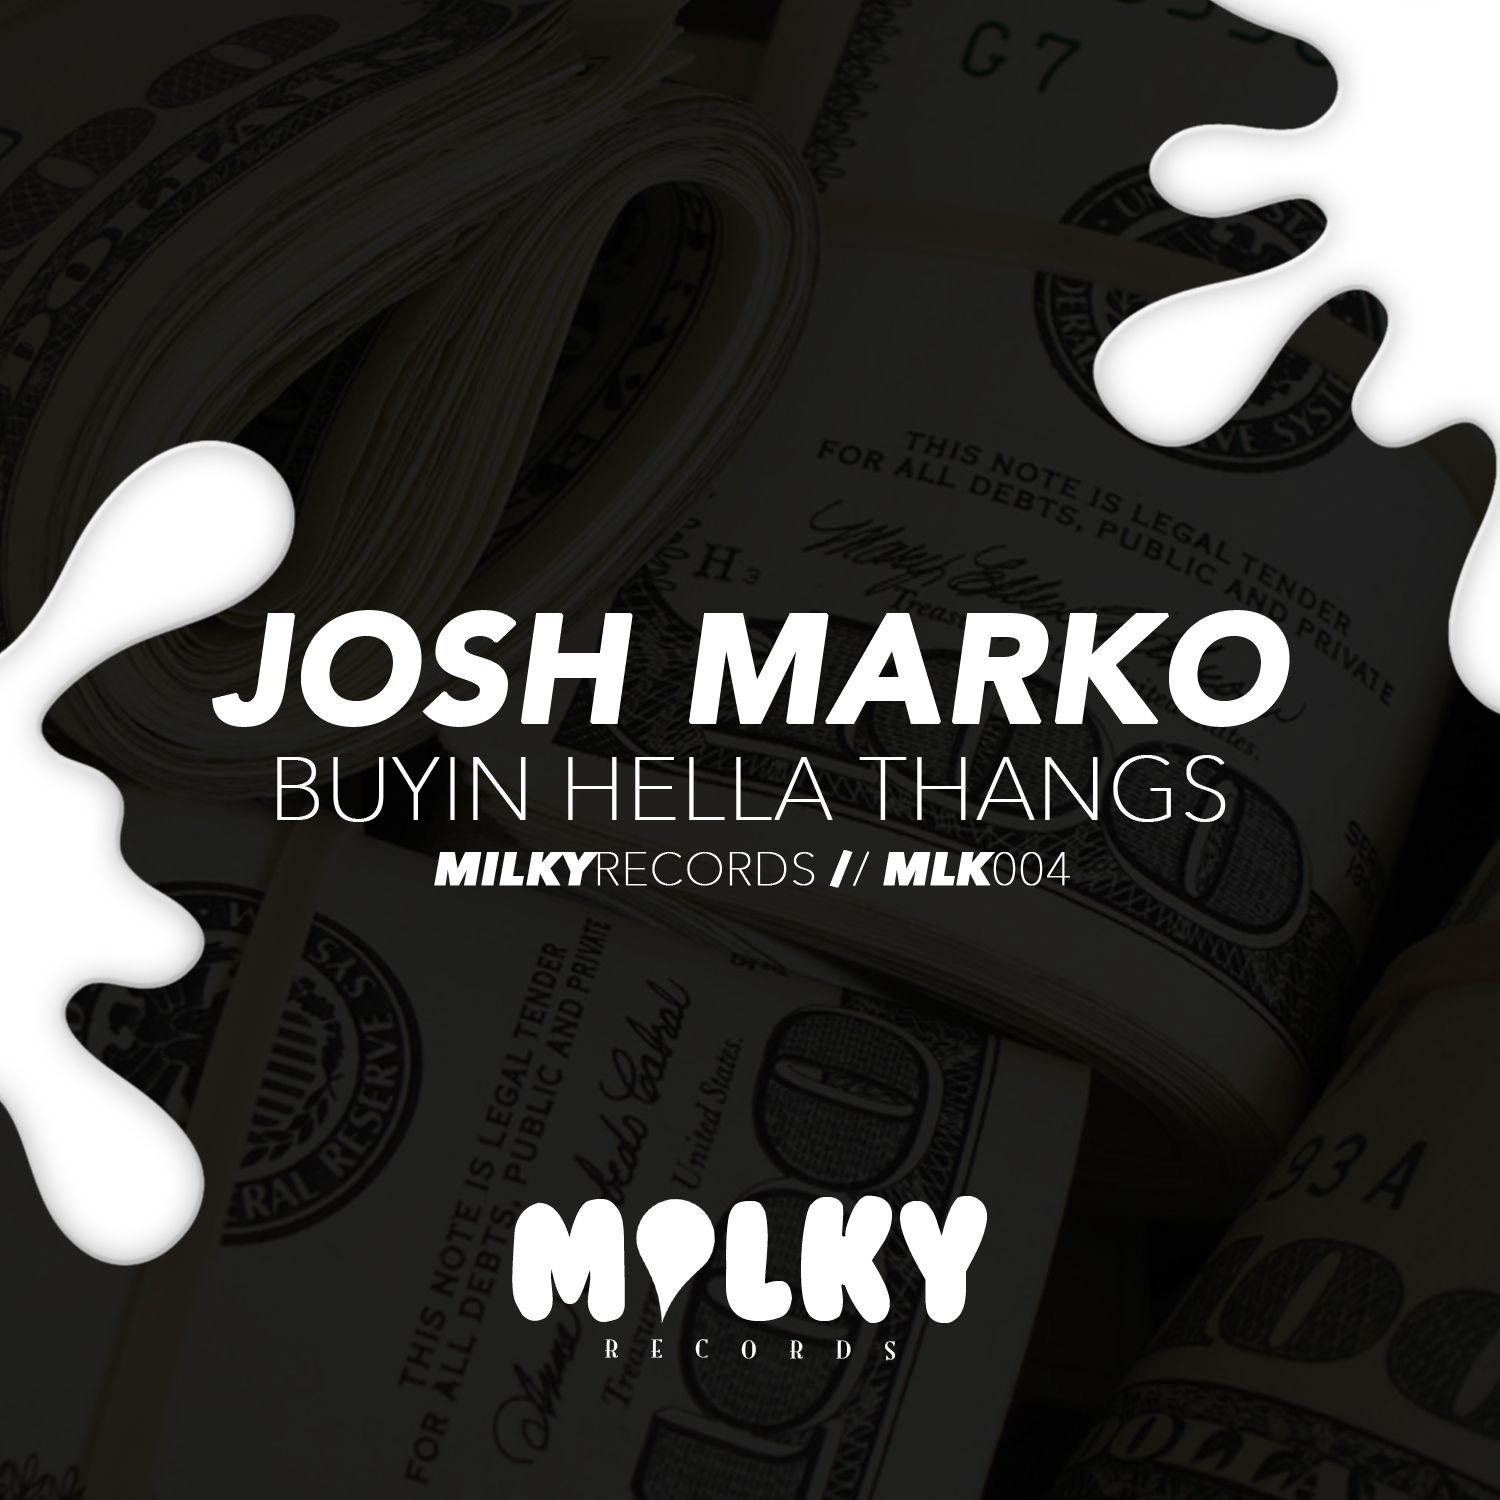 Josh Marko - Buyin Hella Thangs